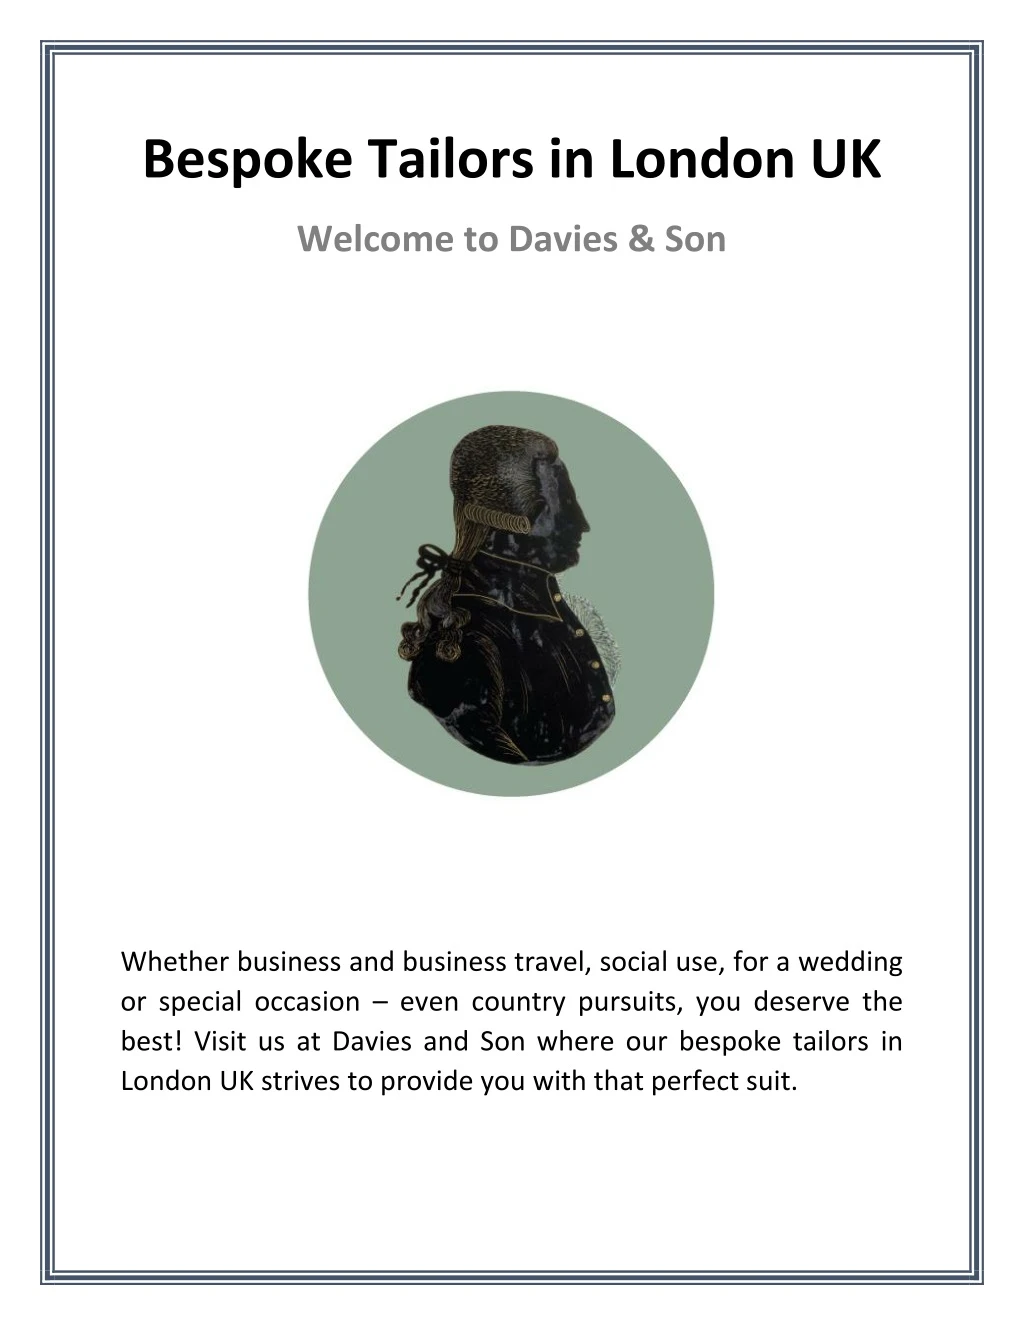 bespoke tailors in london uk